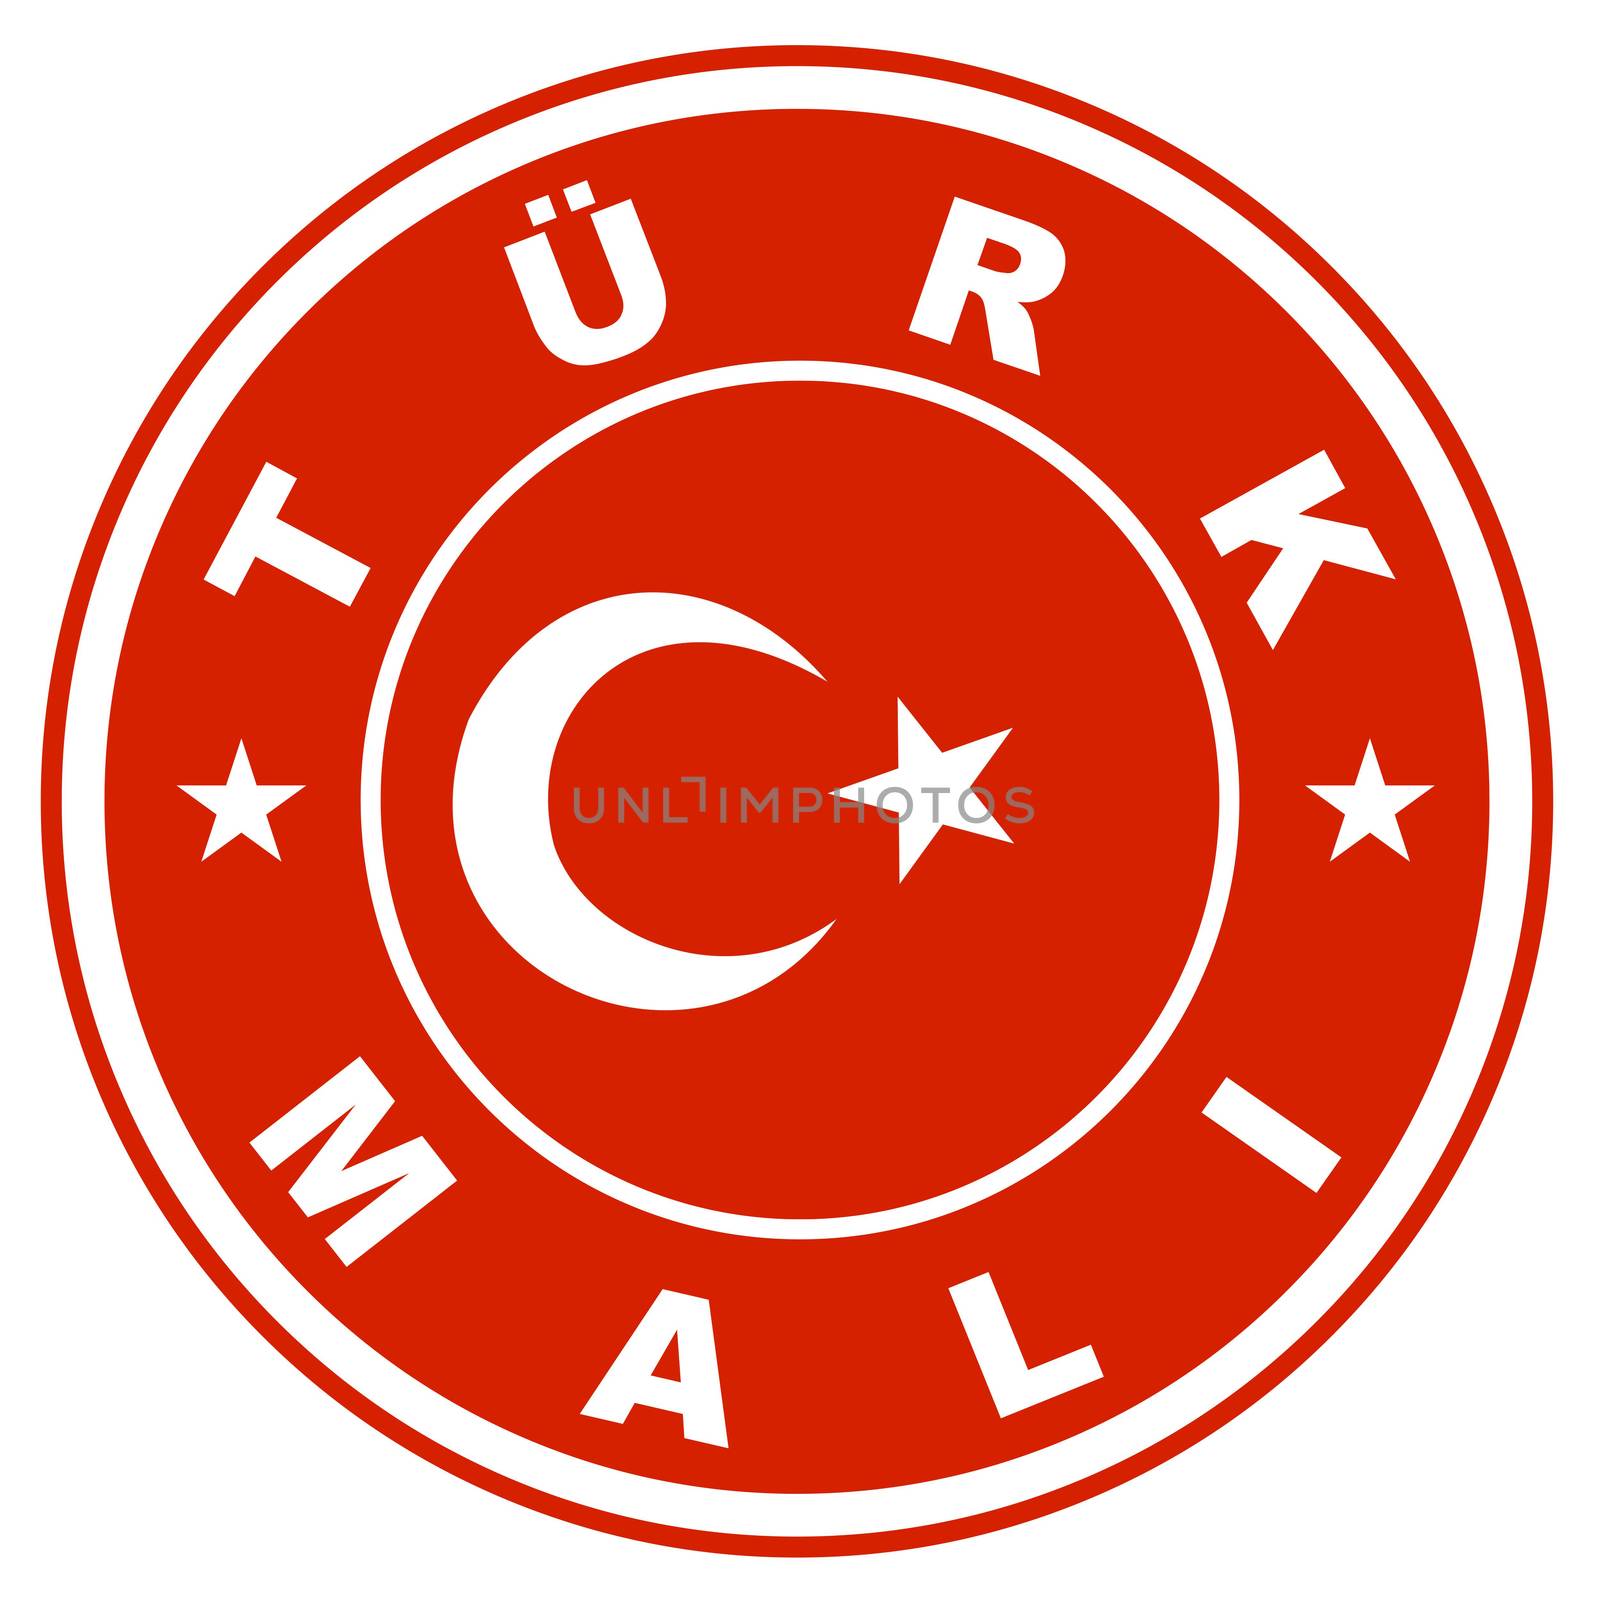 turk mali by tony4urban